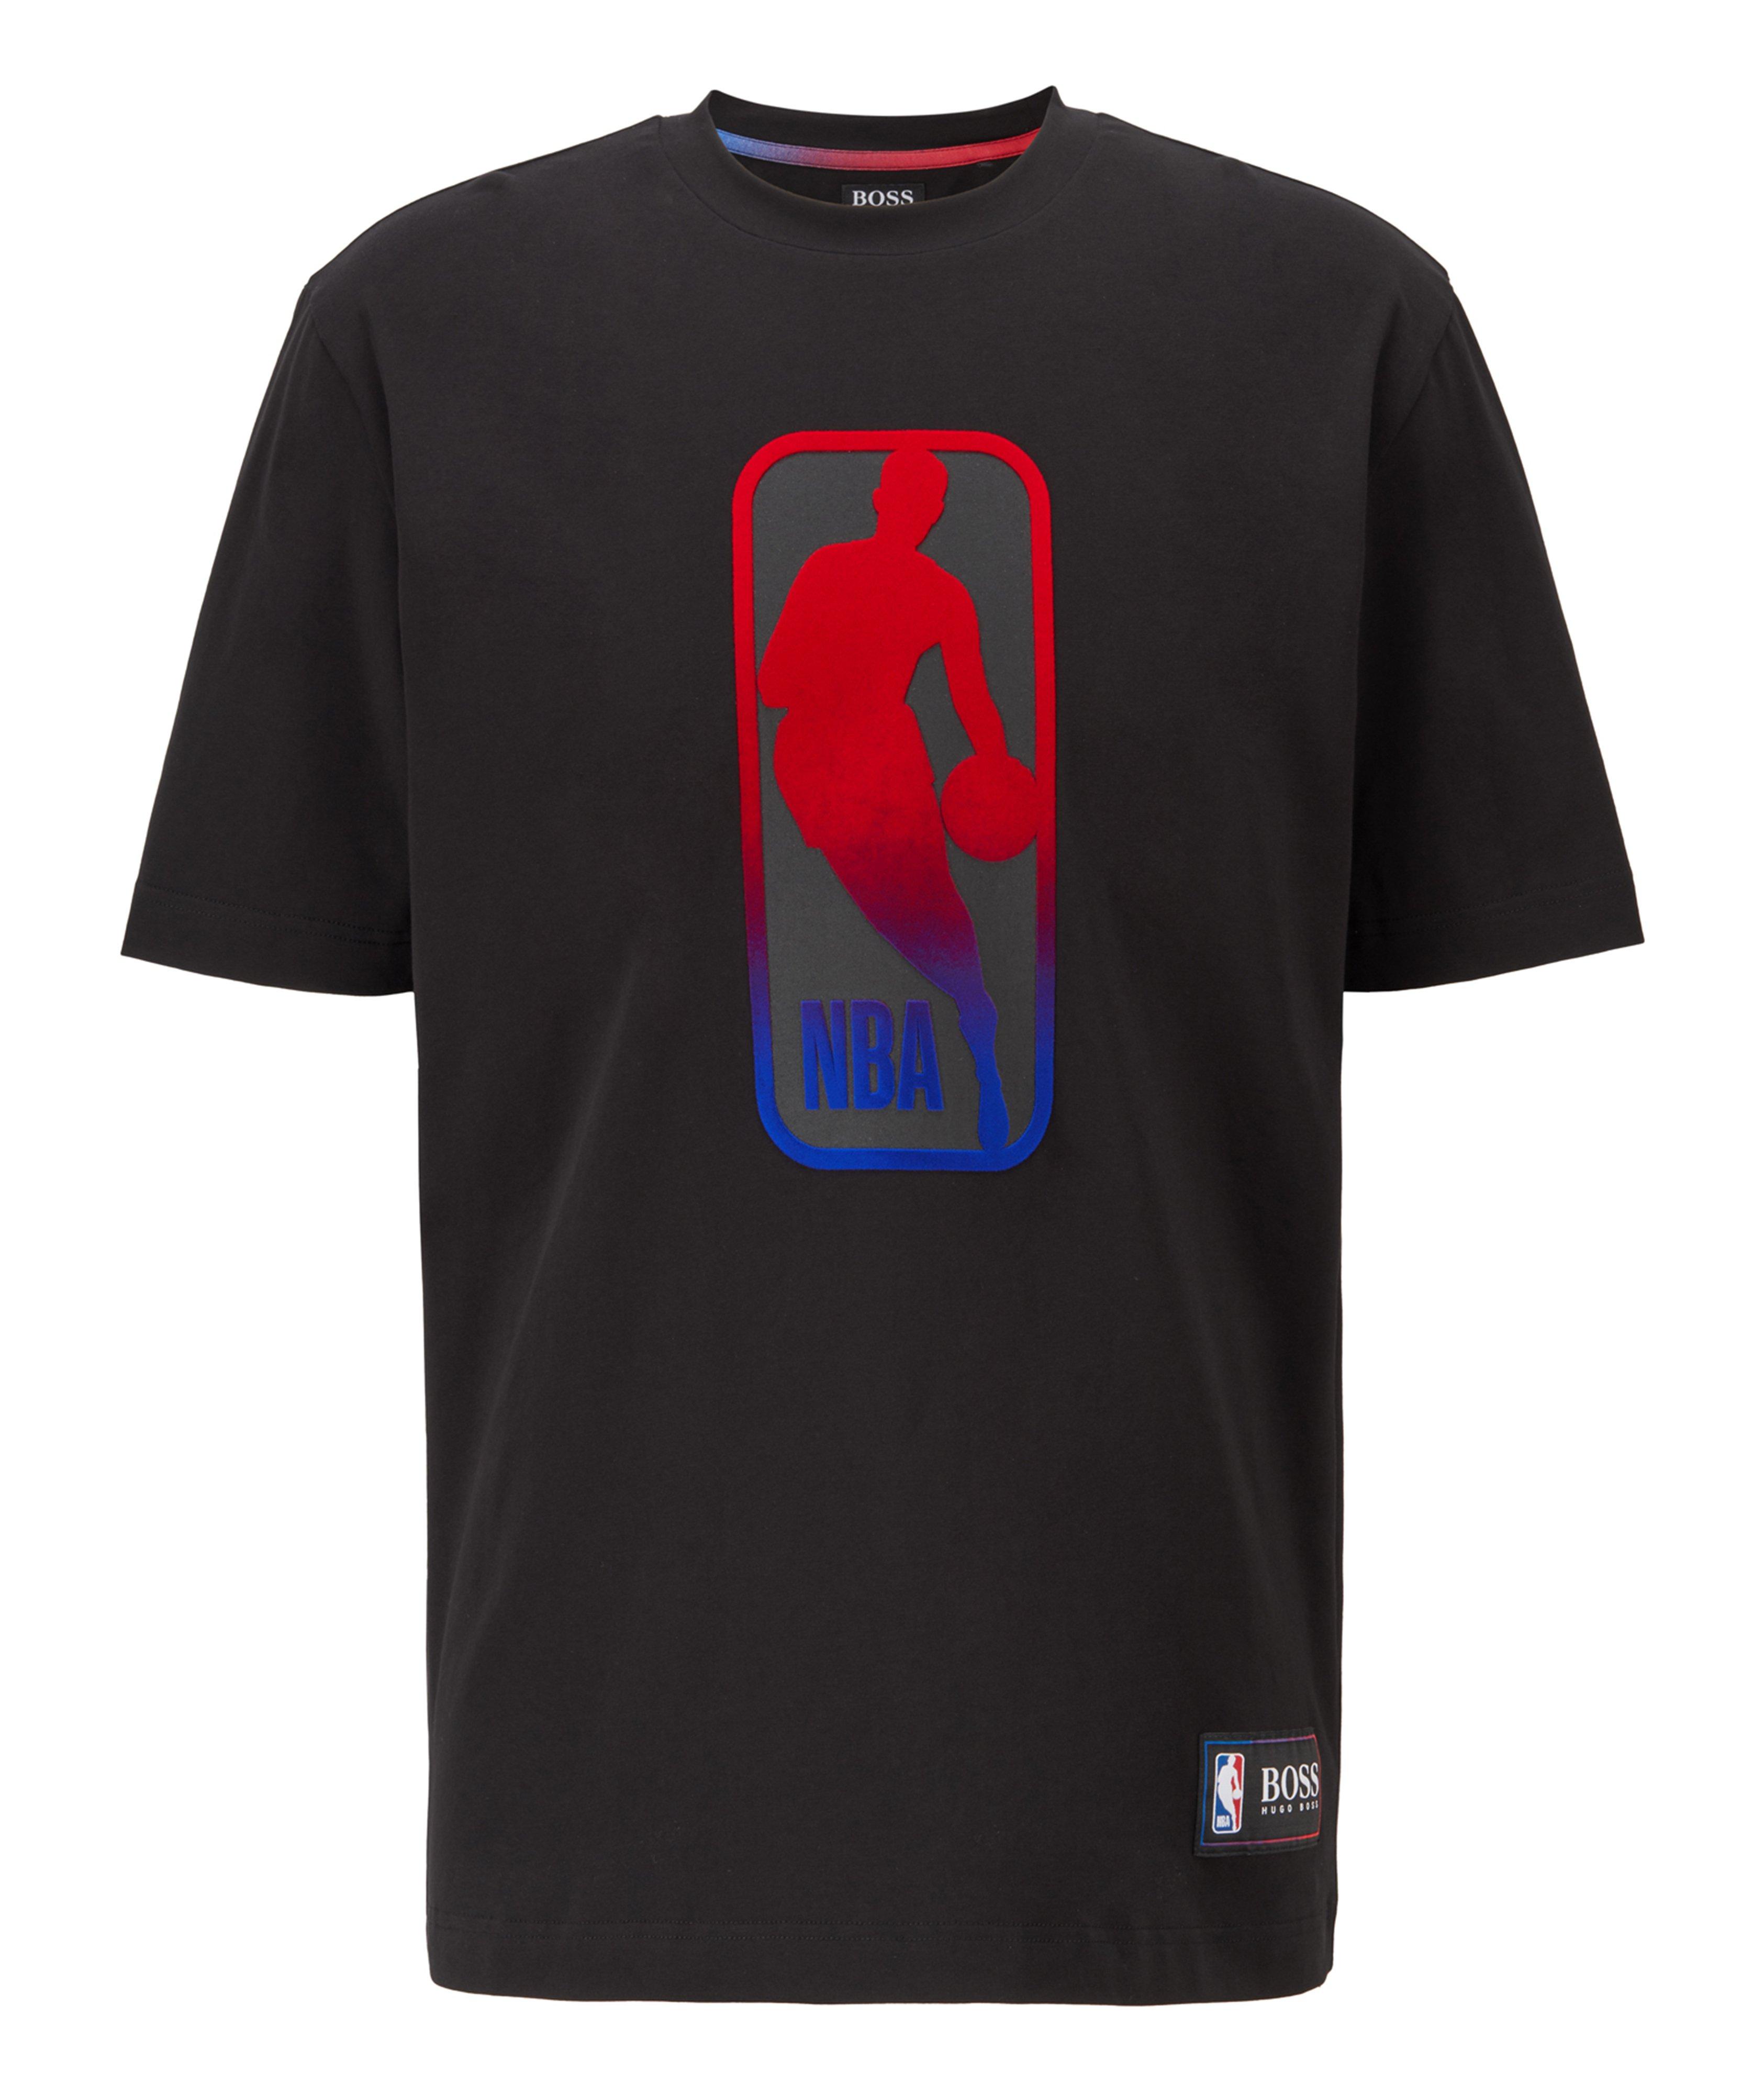 BOSS x NBA Printed Stretch-Cotton T-Shirt image 0